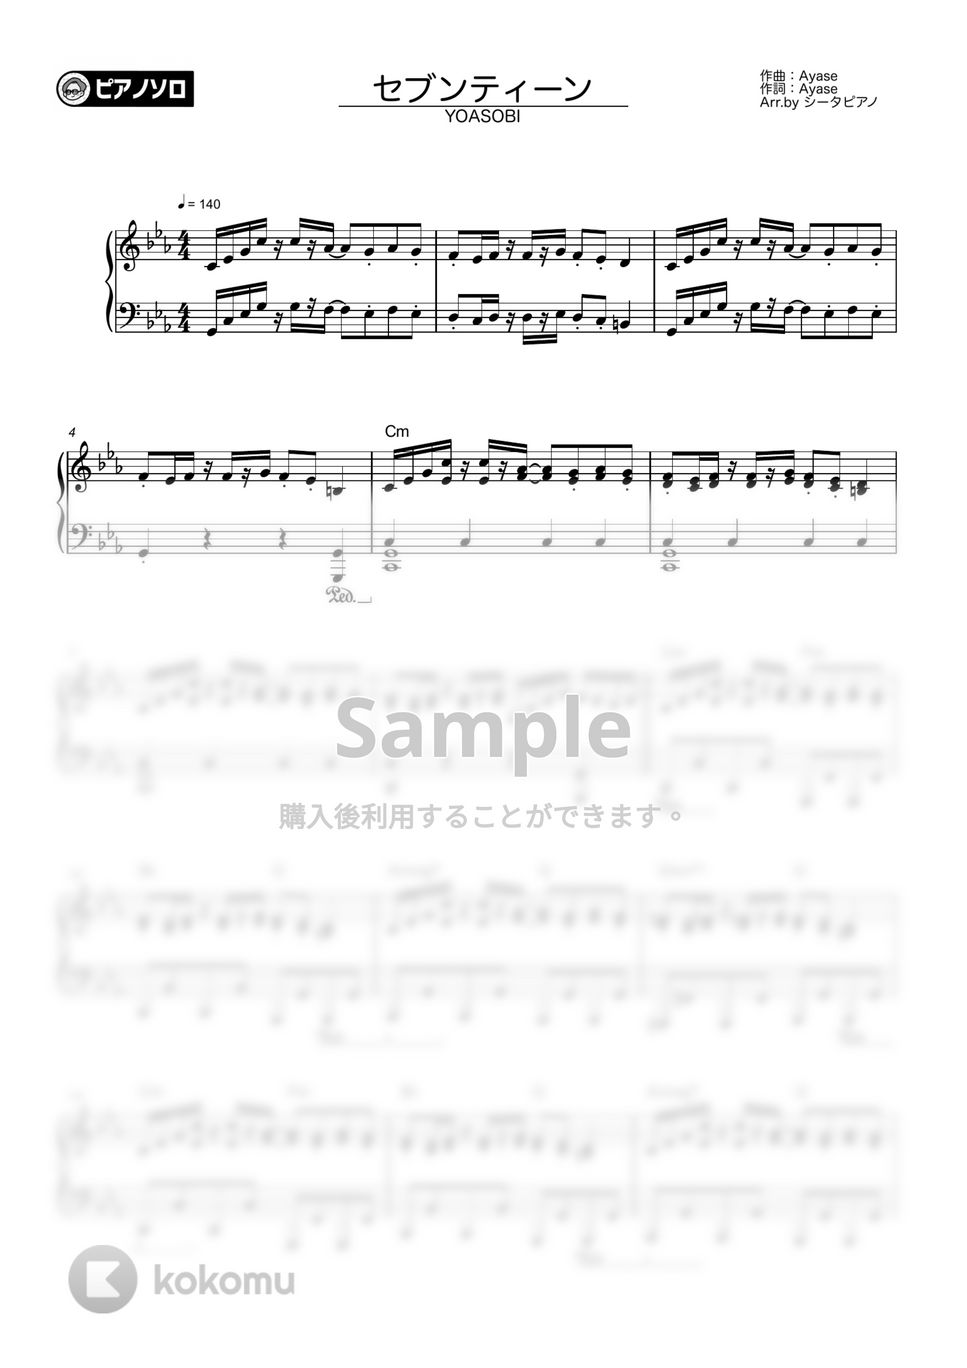 YOASOBI - セブンティーン by シータピアノ